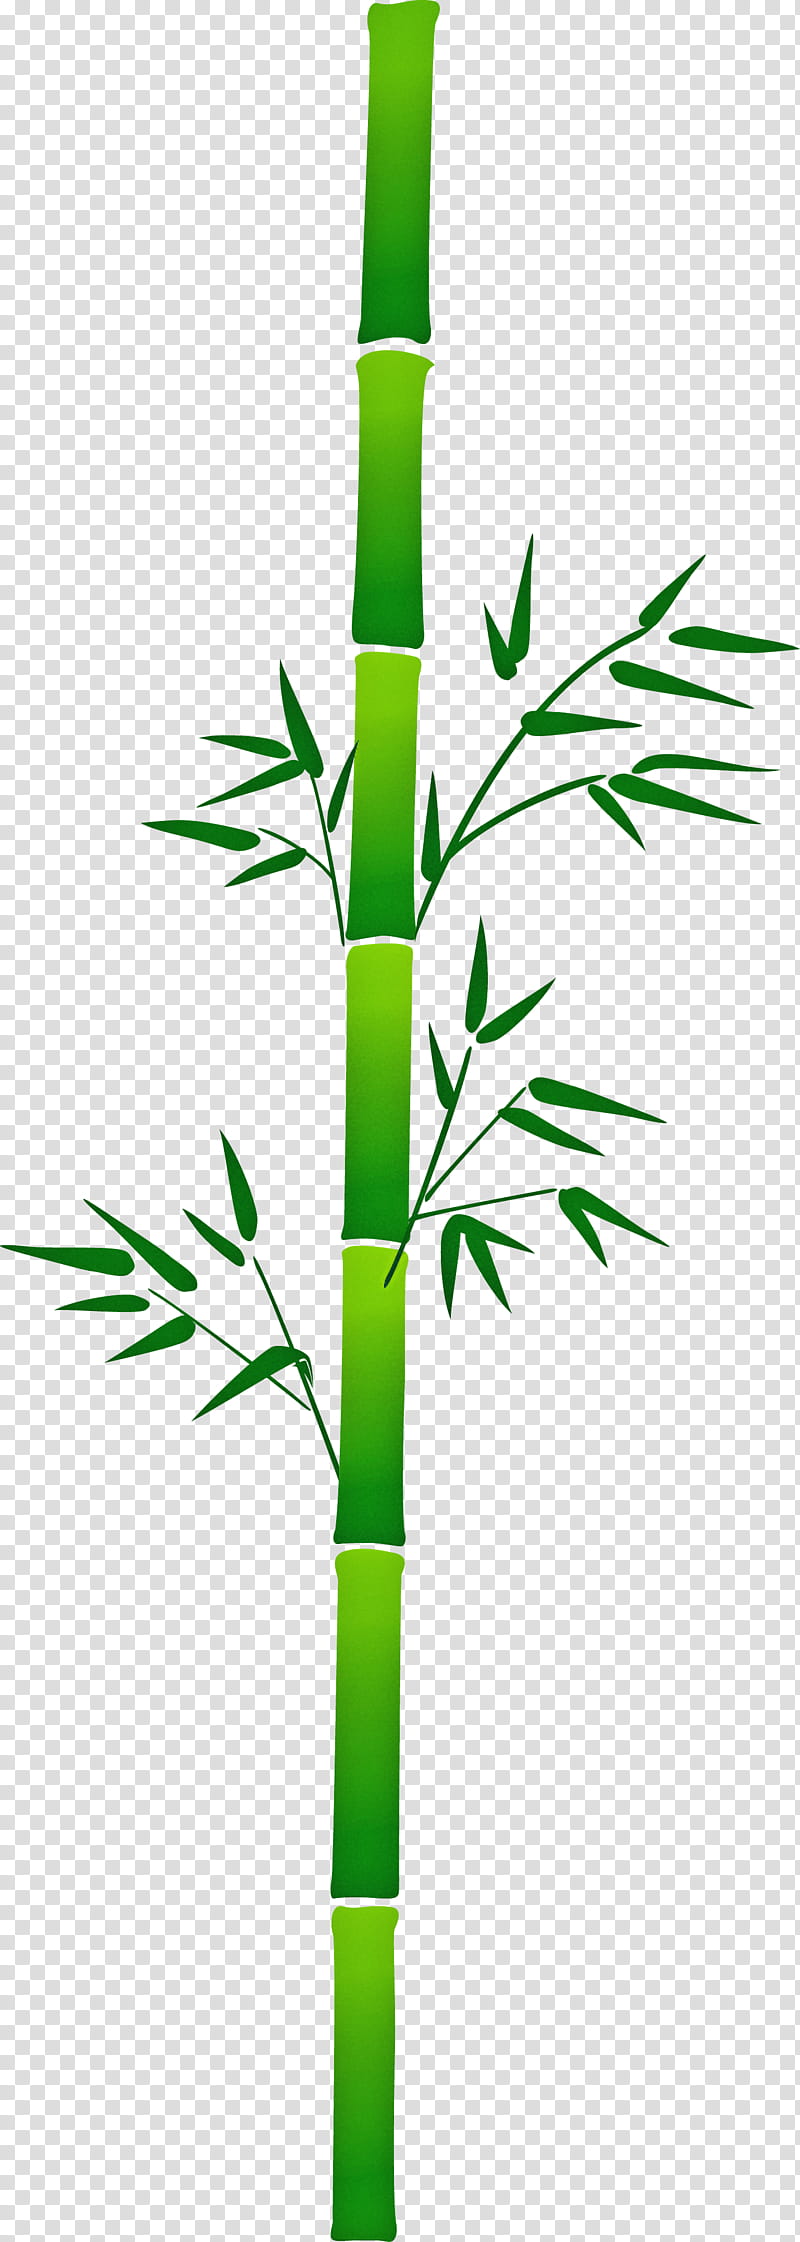 bamboo leaf, Plant, Plant Stem, Grass Family, Elymus Repens, Flower, Vascular Plant, Pedicel transparent background PNG clipart